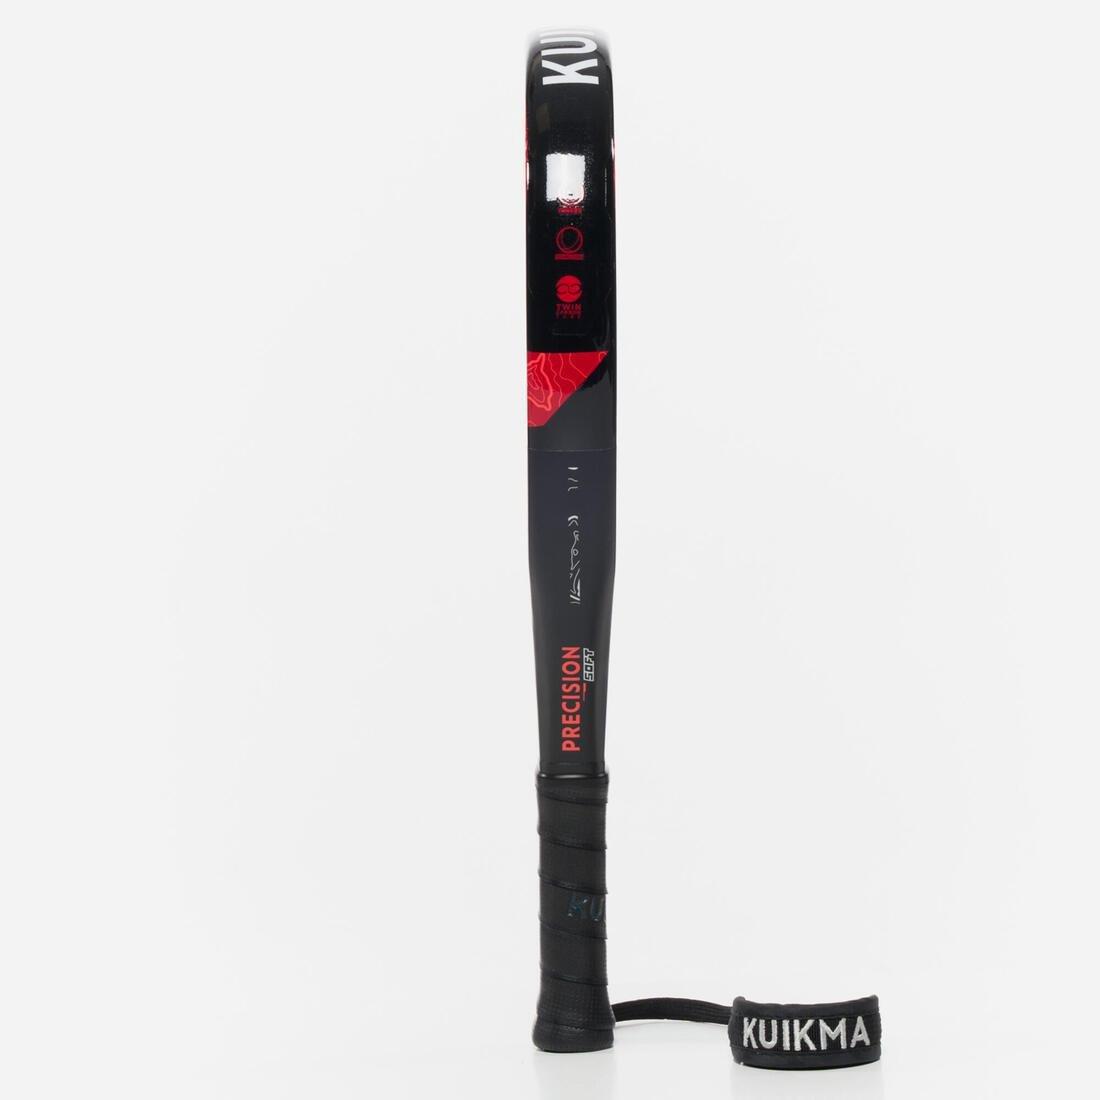 KUIKMA - Unisex Padel Racket - Pr 990 Precision Soft, Black